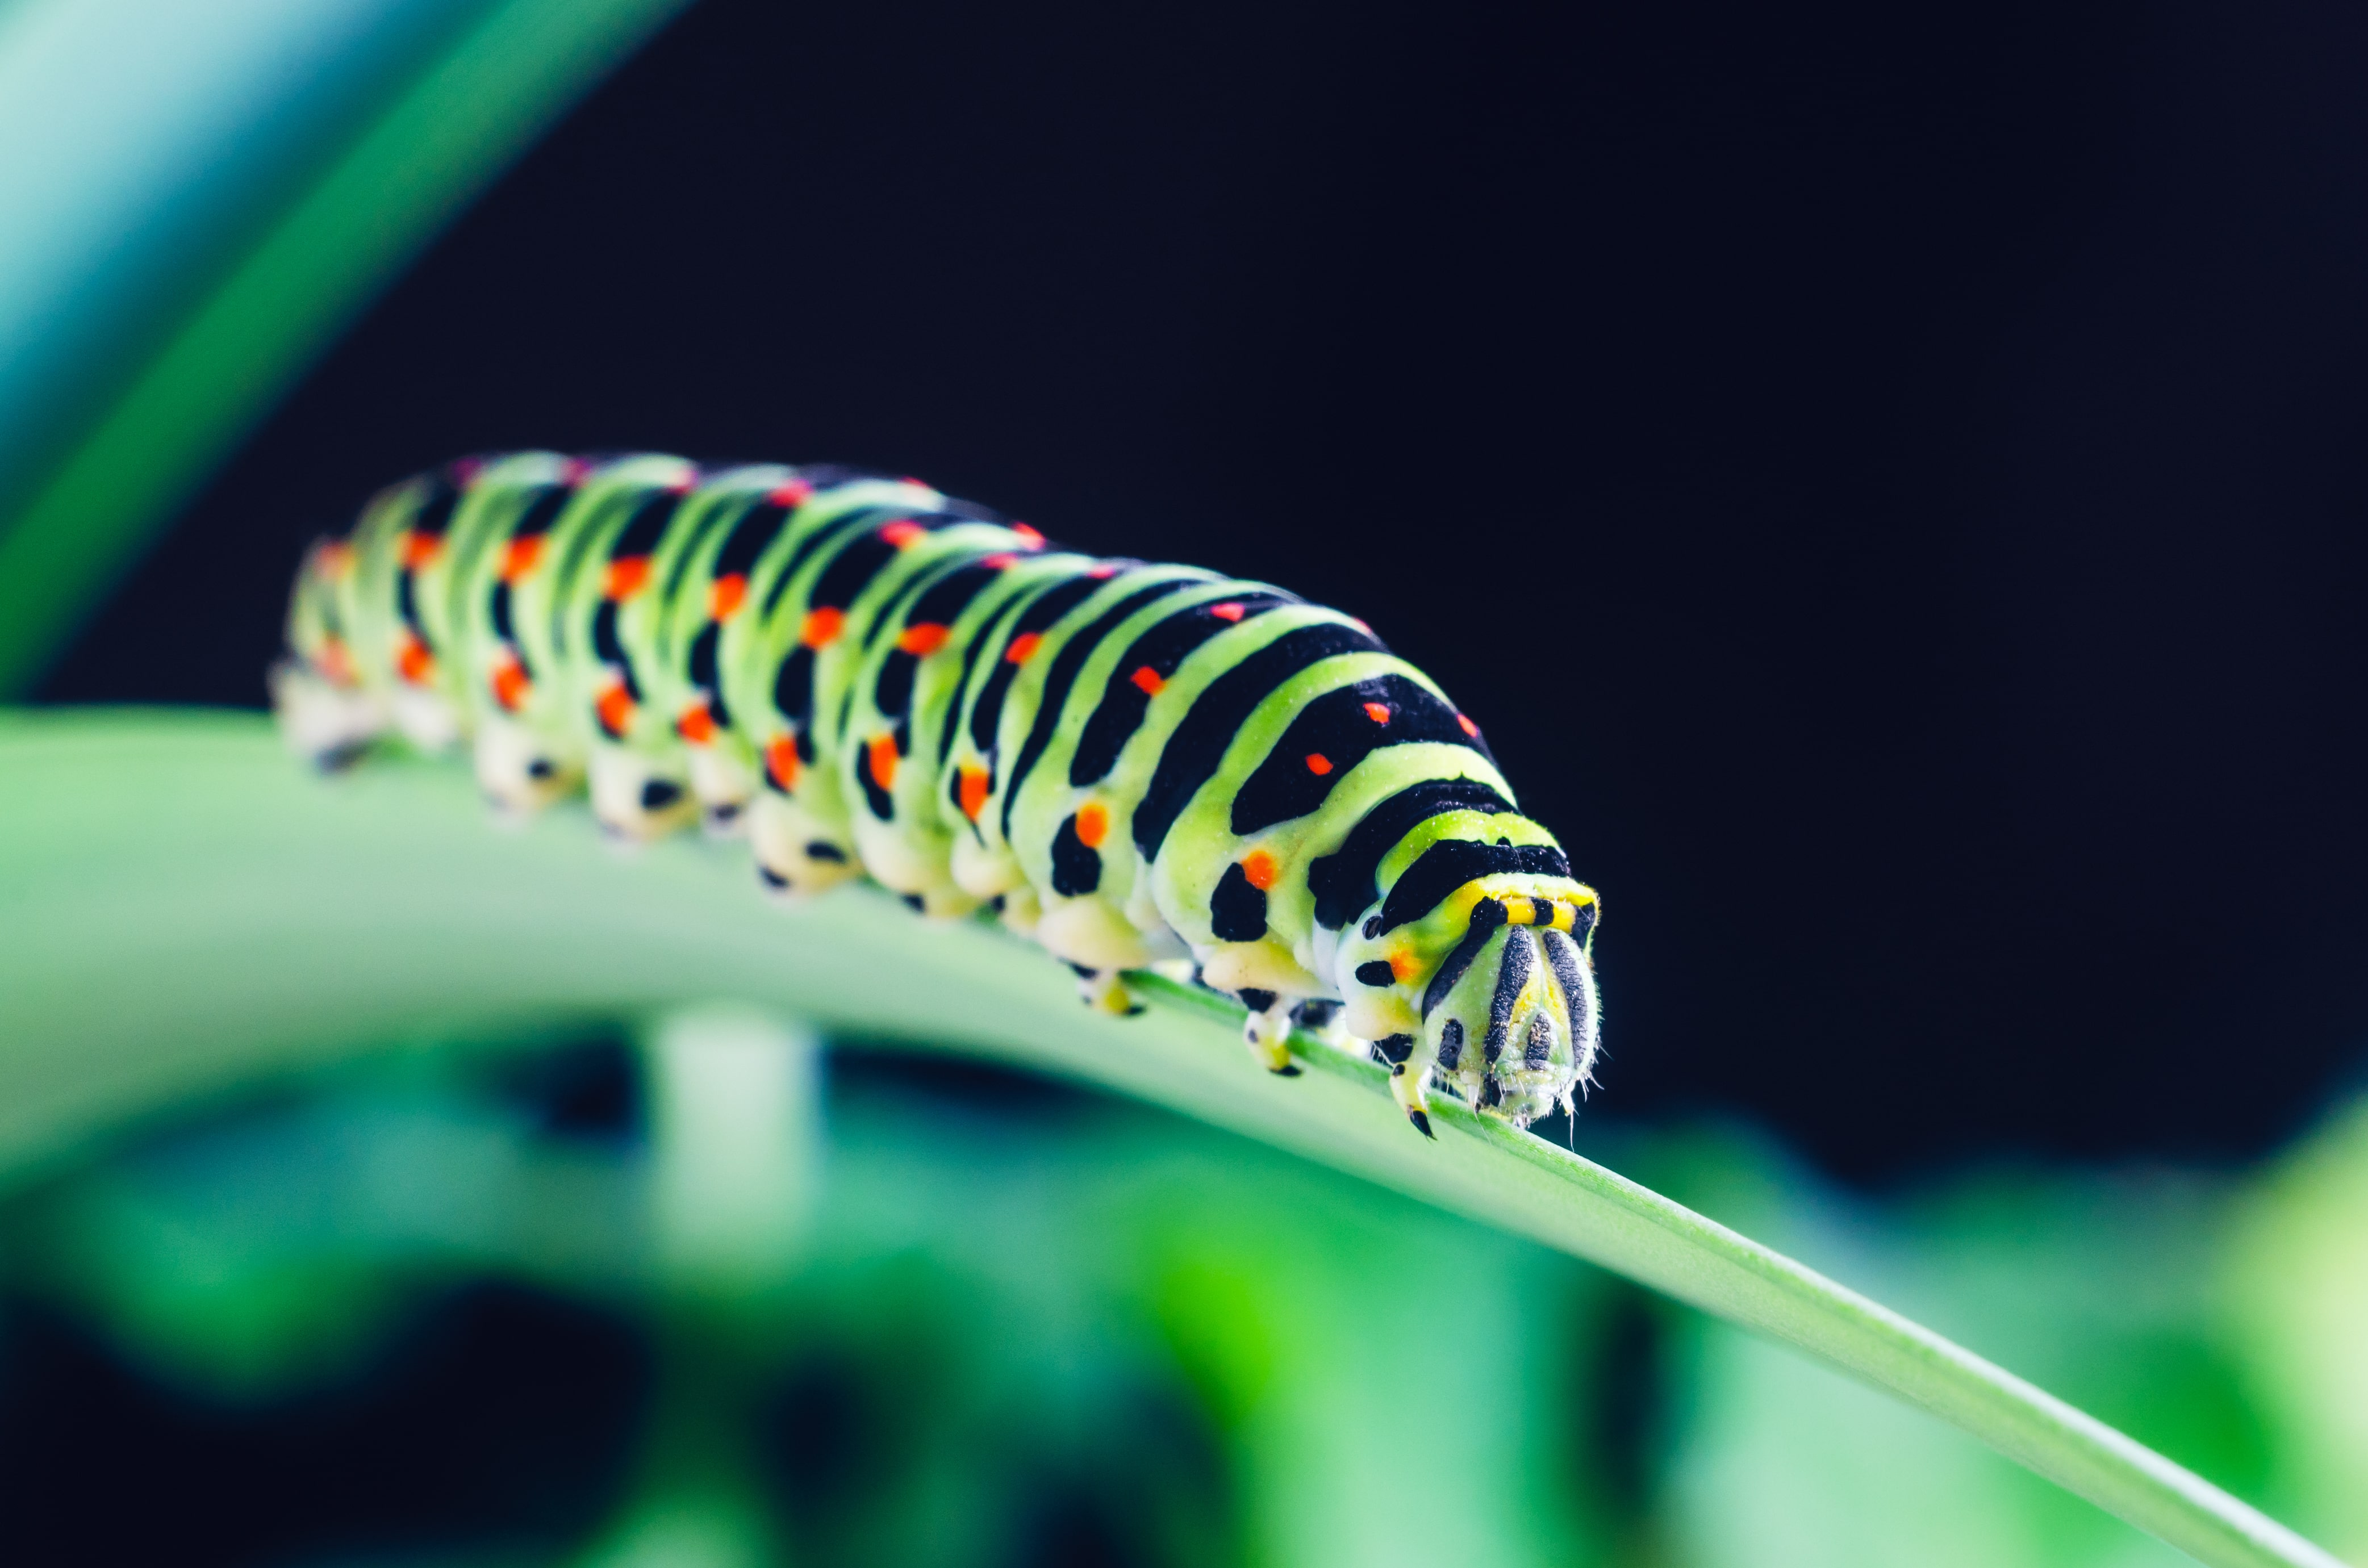 Caterpillar crawling along plants  